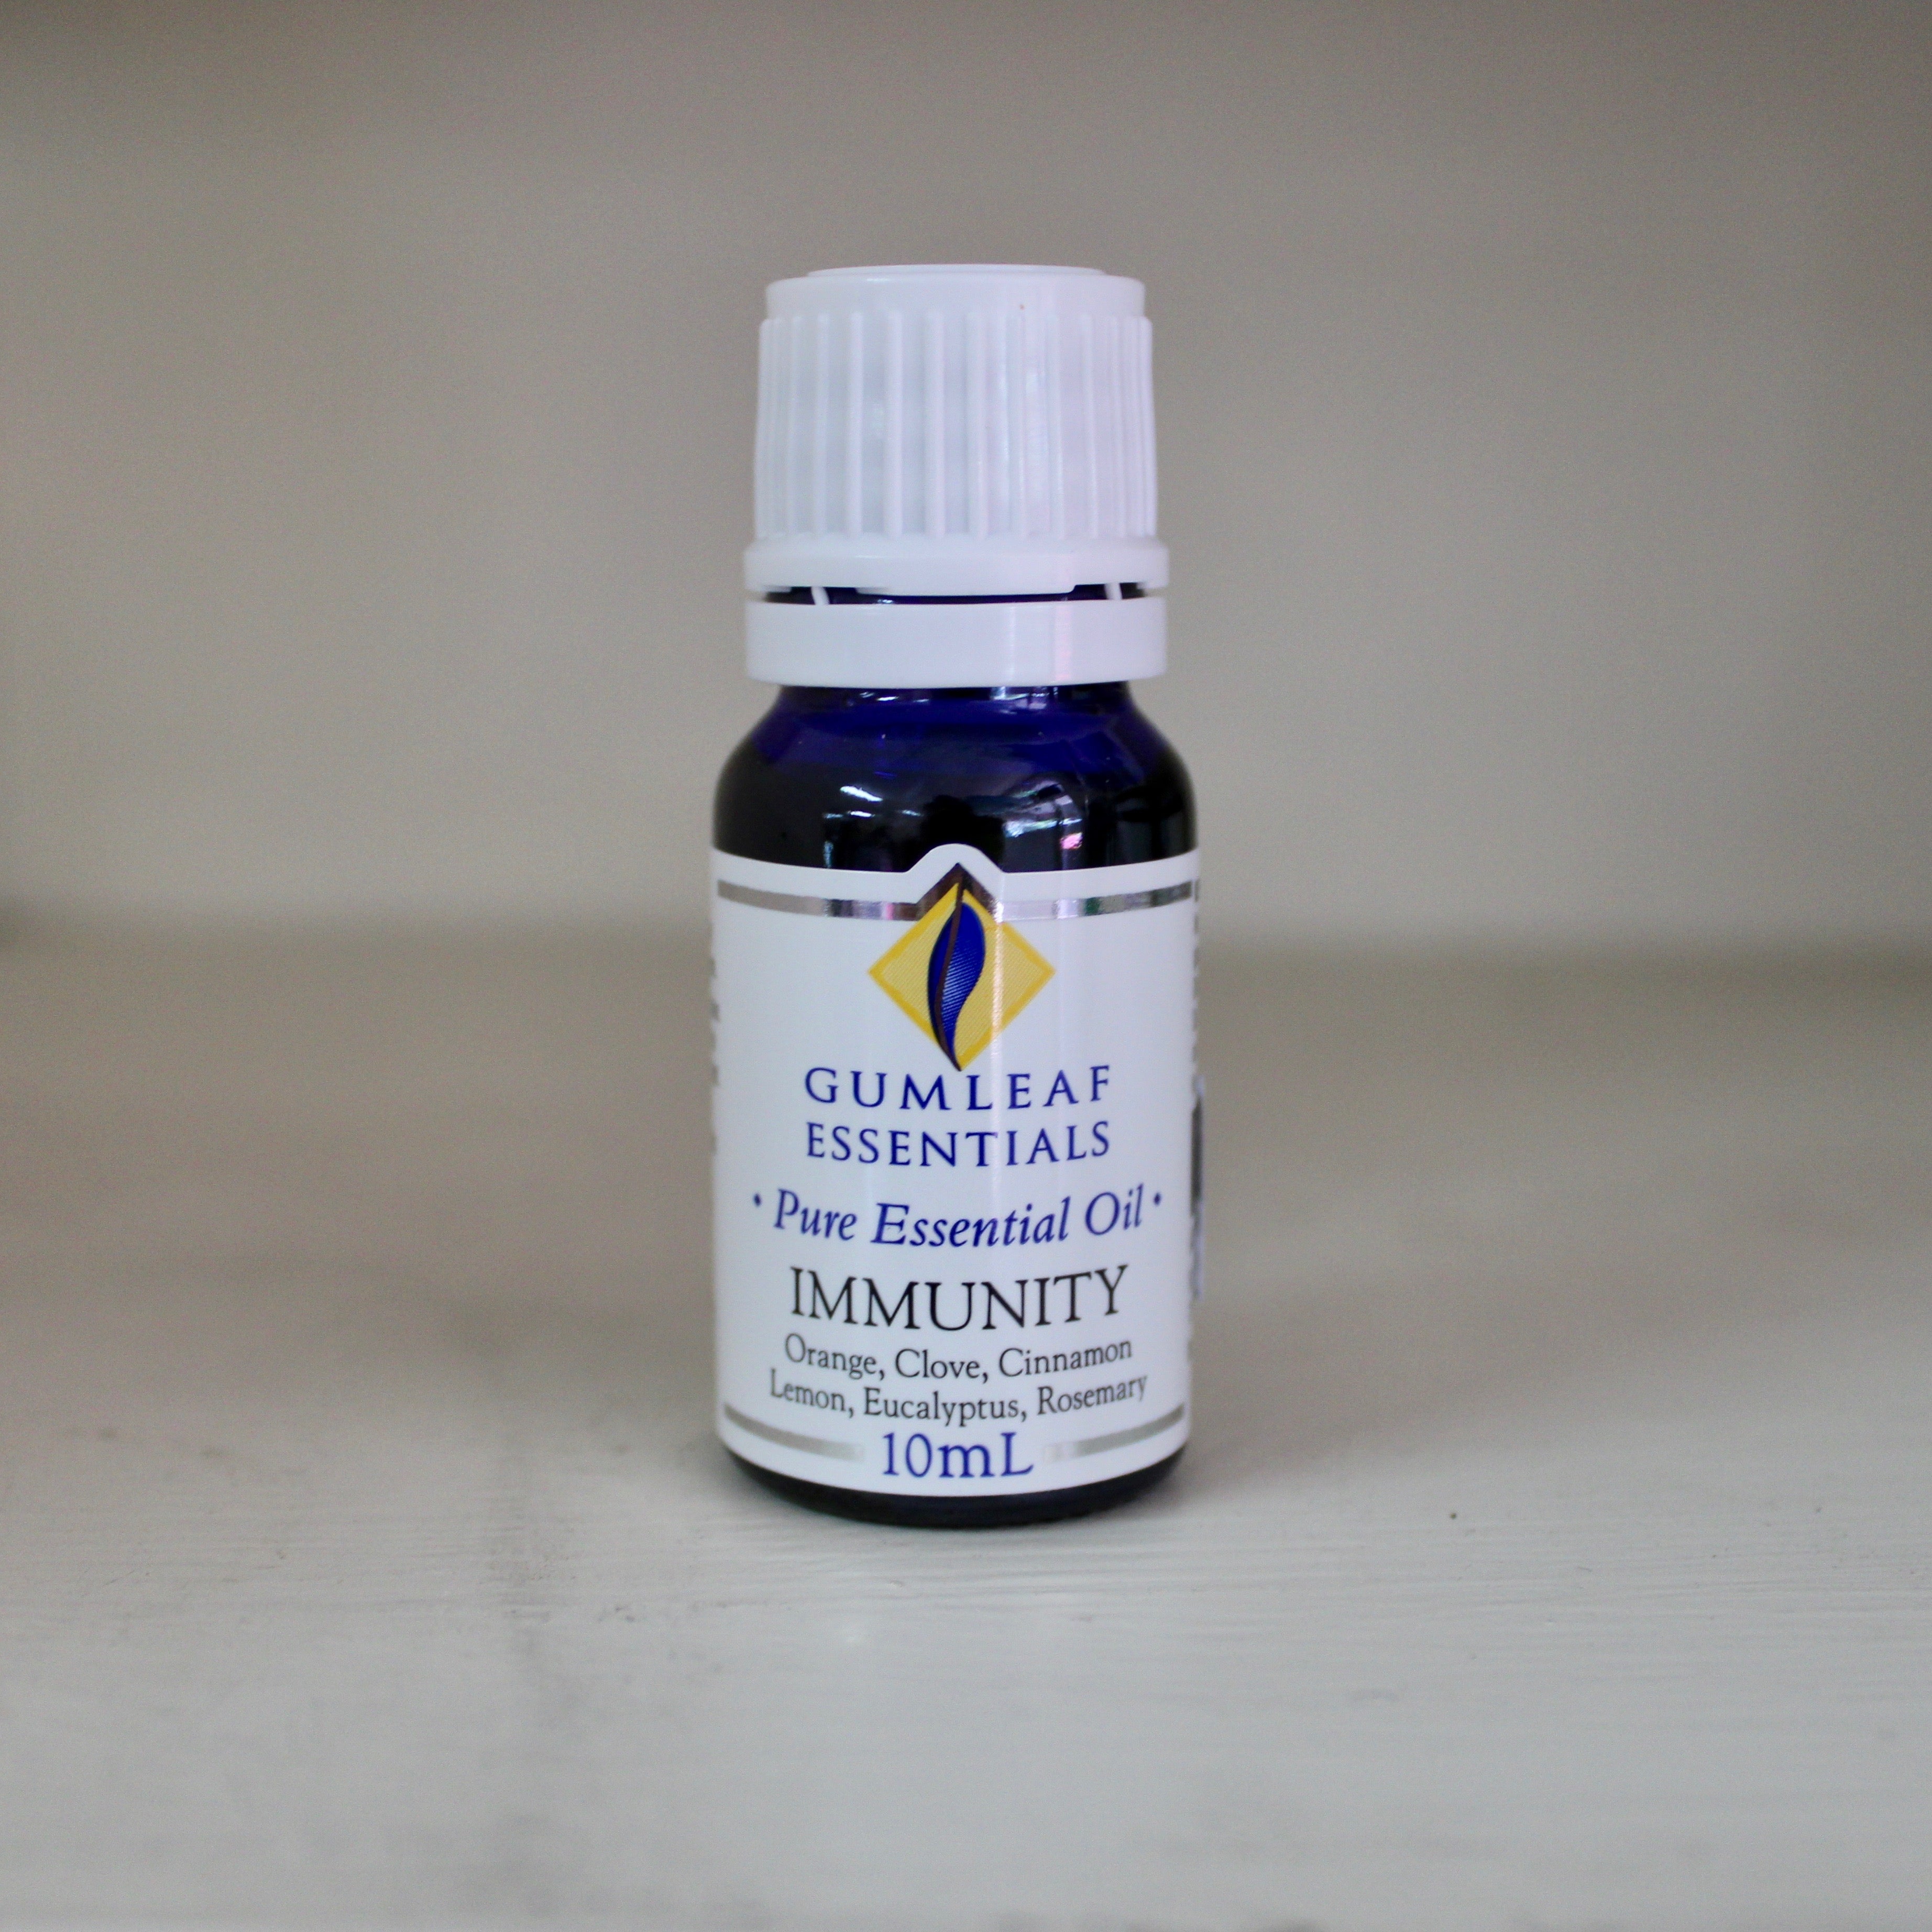 Gumleaf Essentials Immunity 10ml Pure Essential Oil